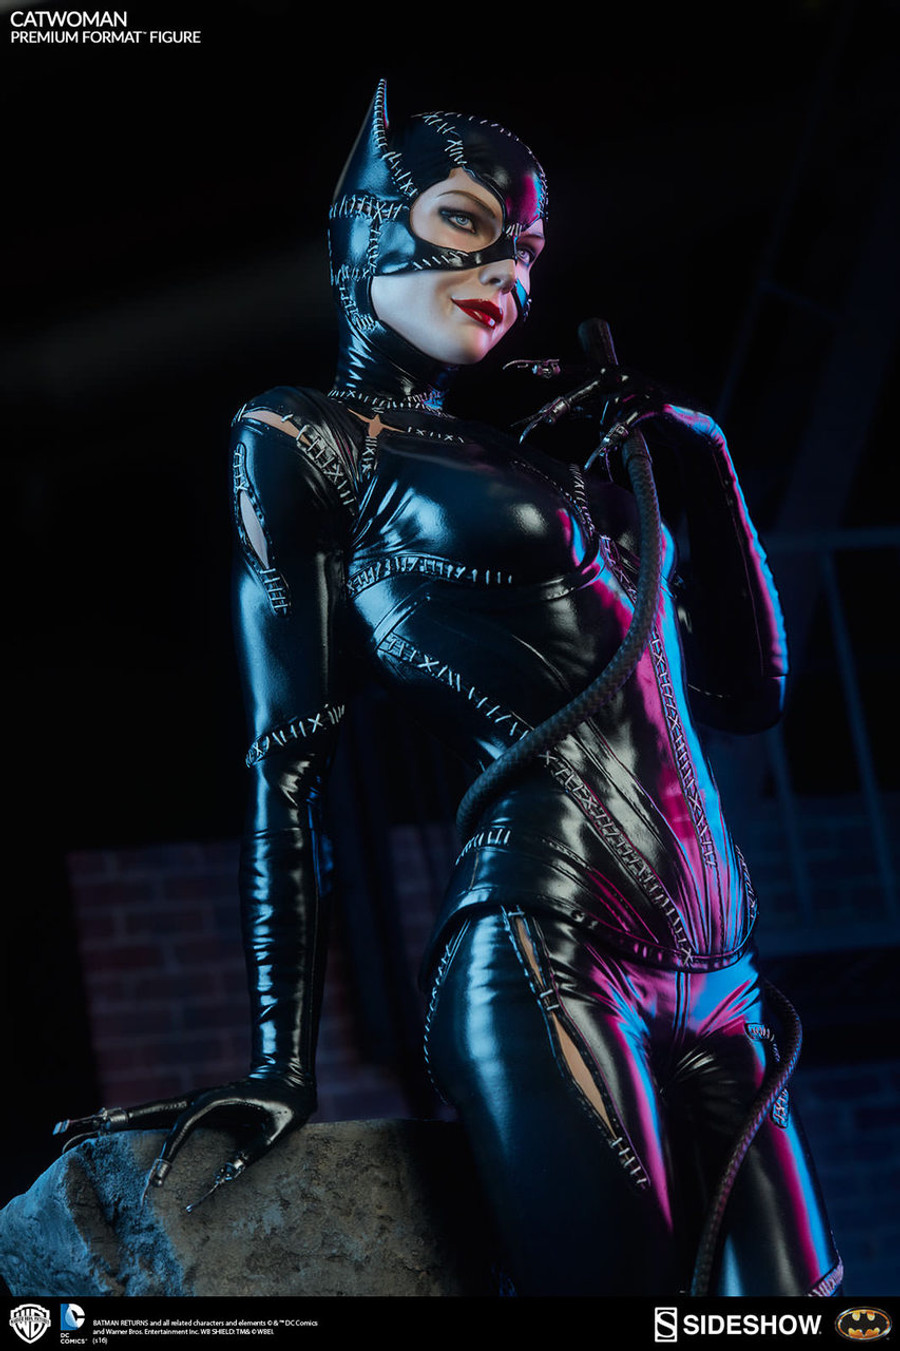 Sideshow - Catwoman - Michelle Pfeiffer 1992 Batman Returns Film Version